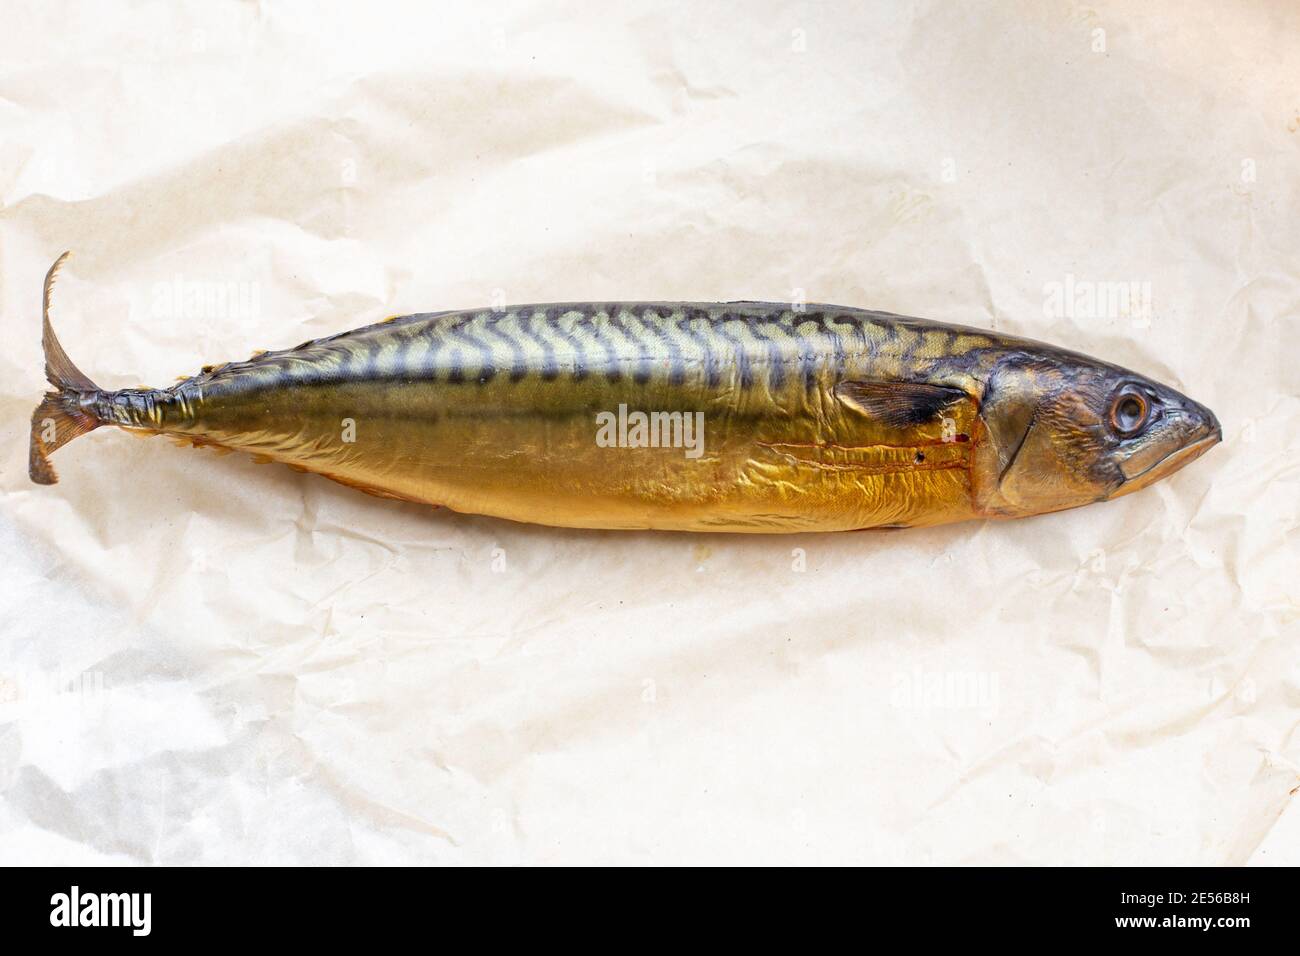 smoked mackerel fish lies on light paper, tasty fatty snack, copy space Stock Photo